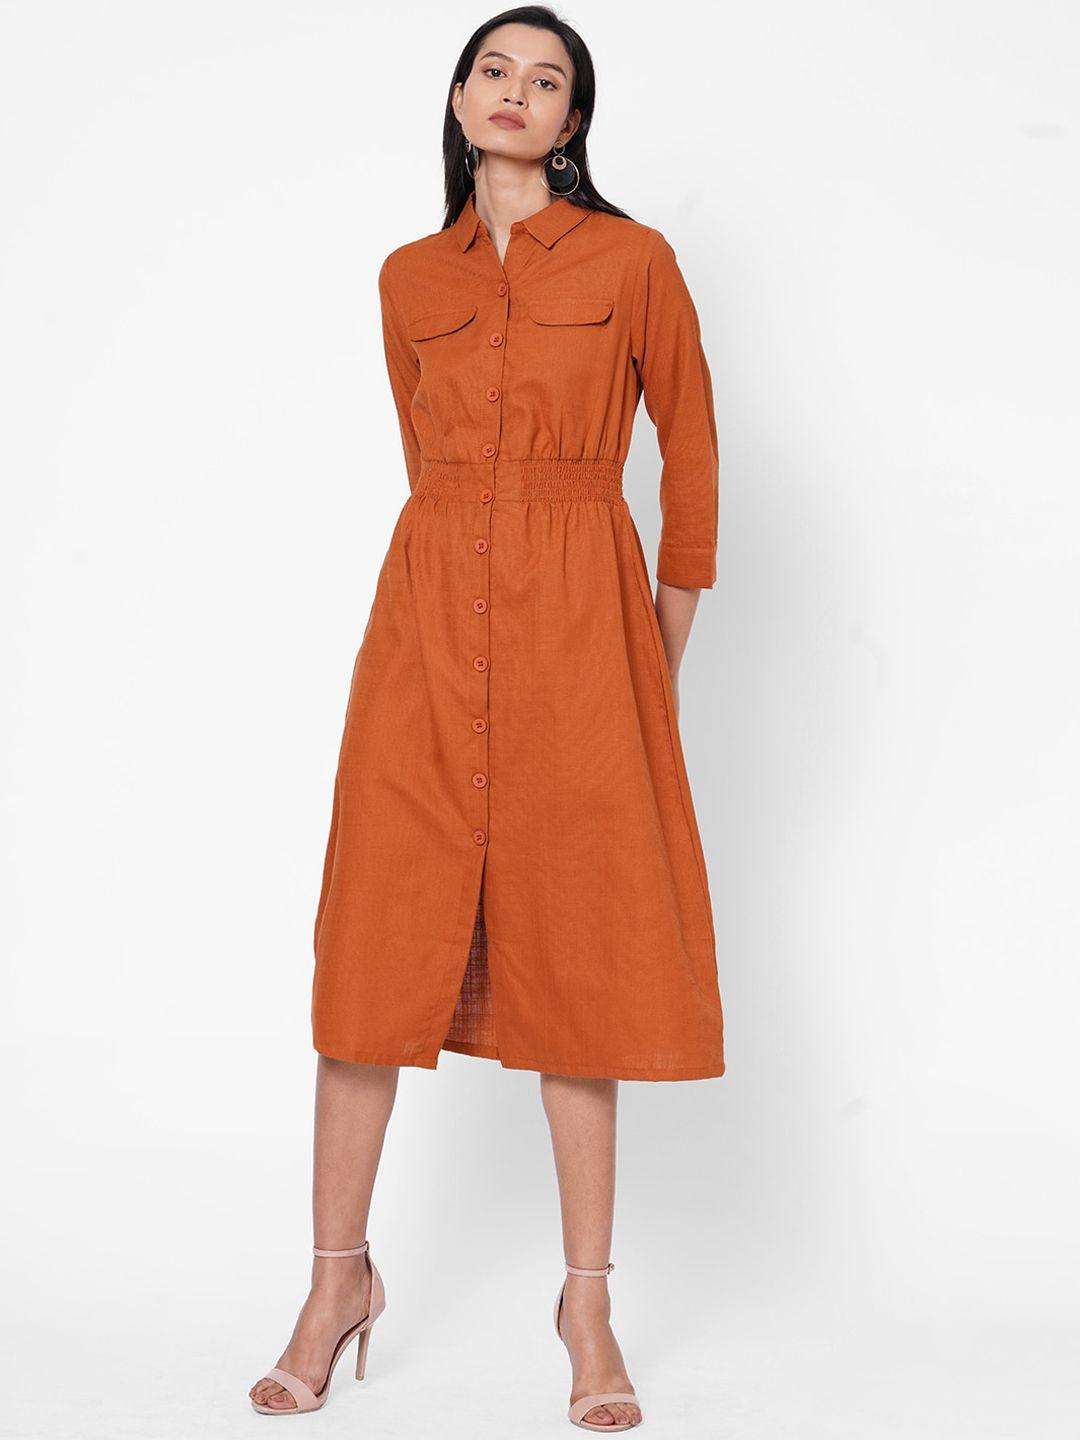 109f-orange-smocked-shirt-midi-dress